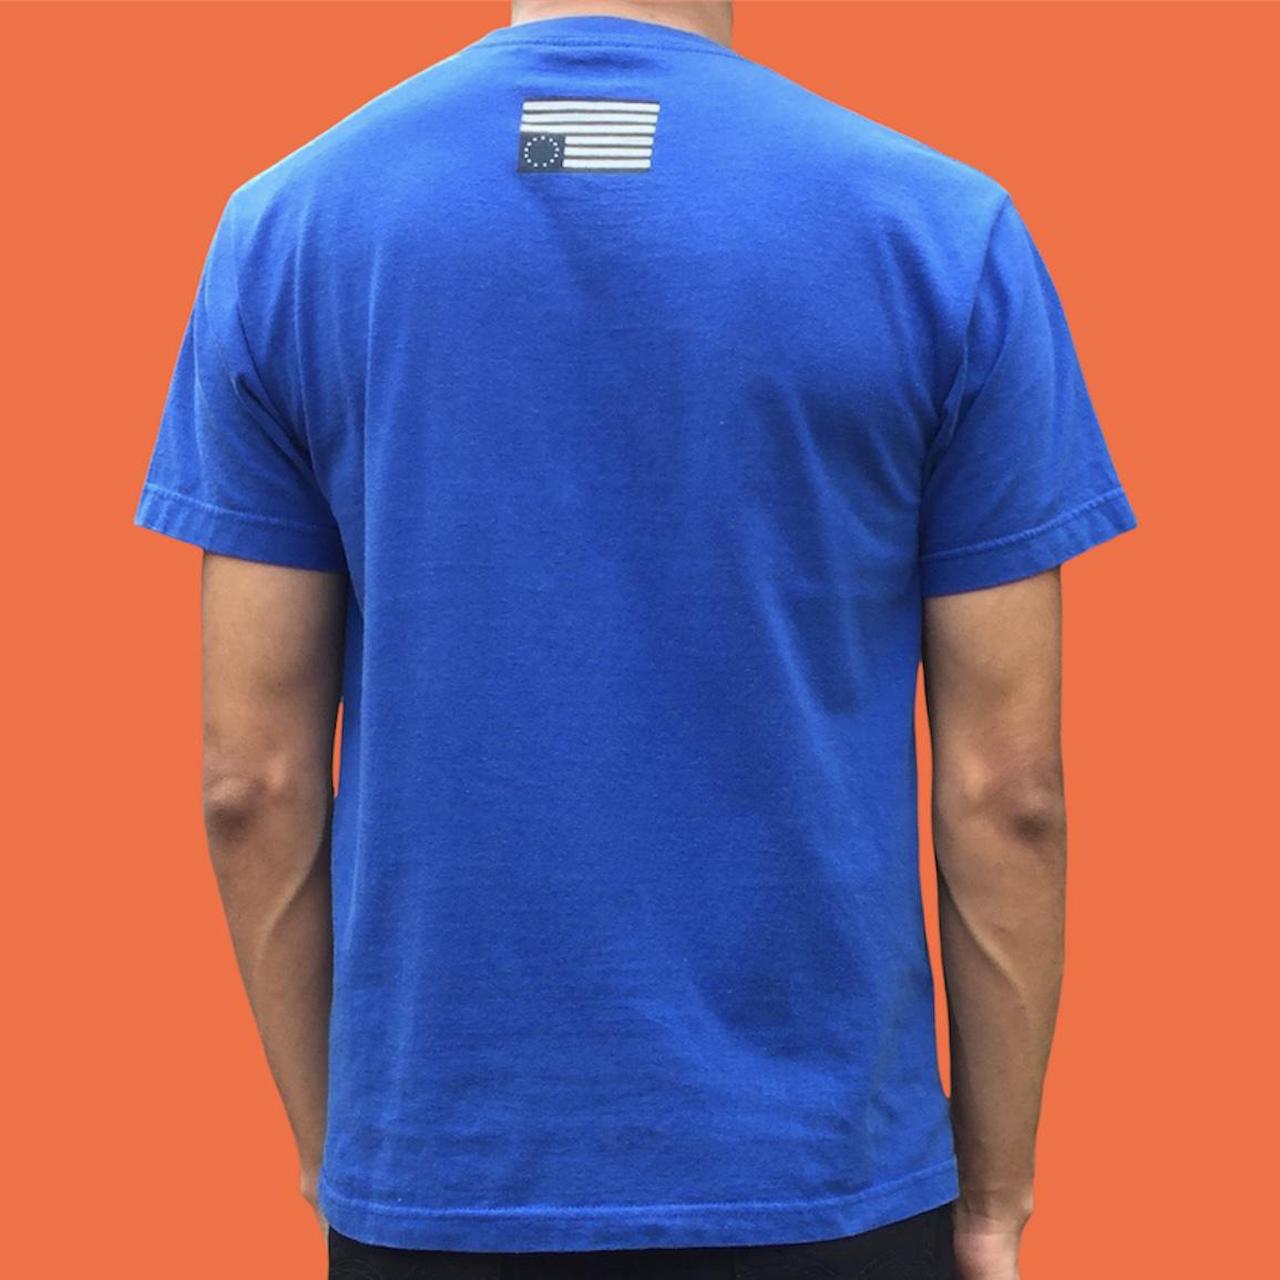 Black Scale Men's Blue and Orange T-shirt (2)